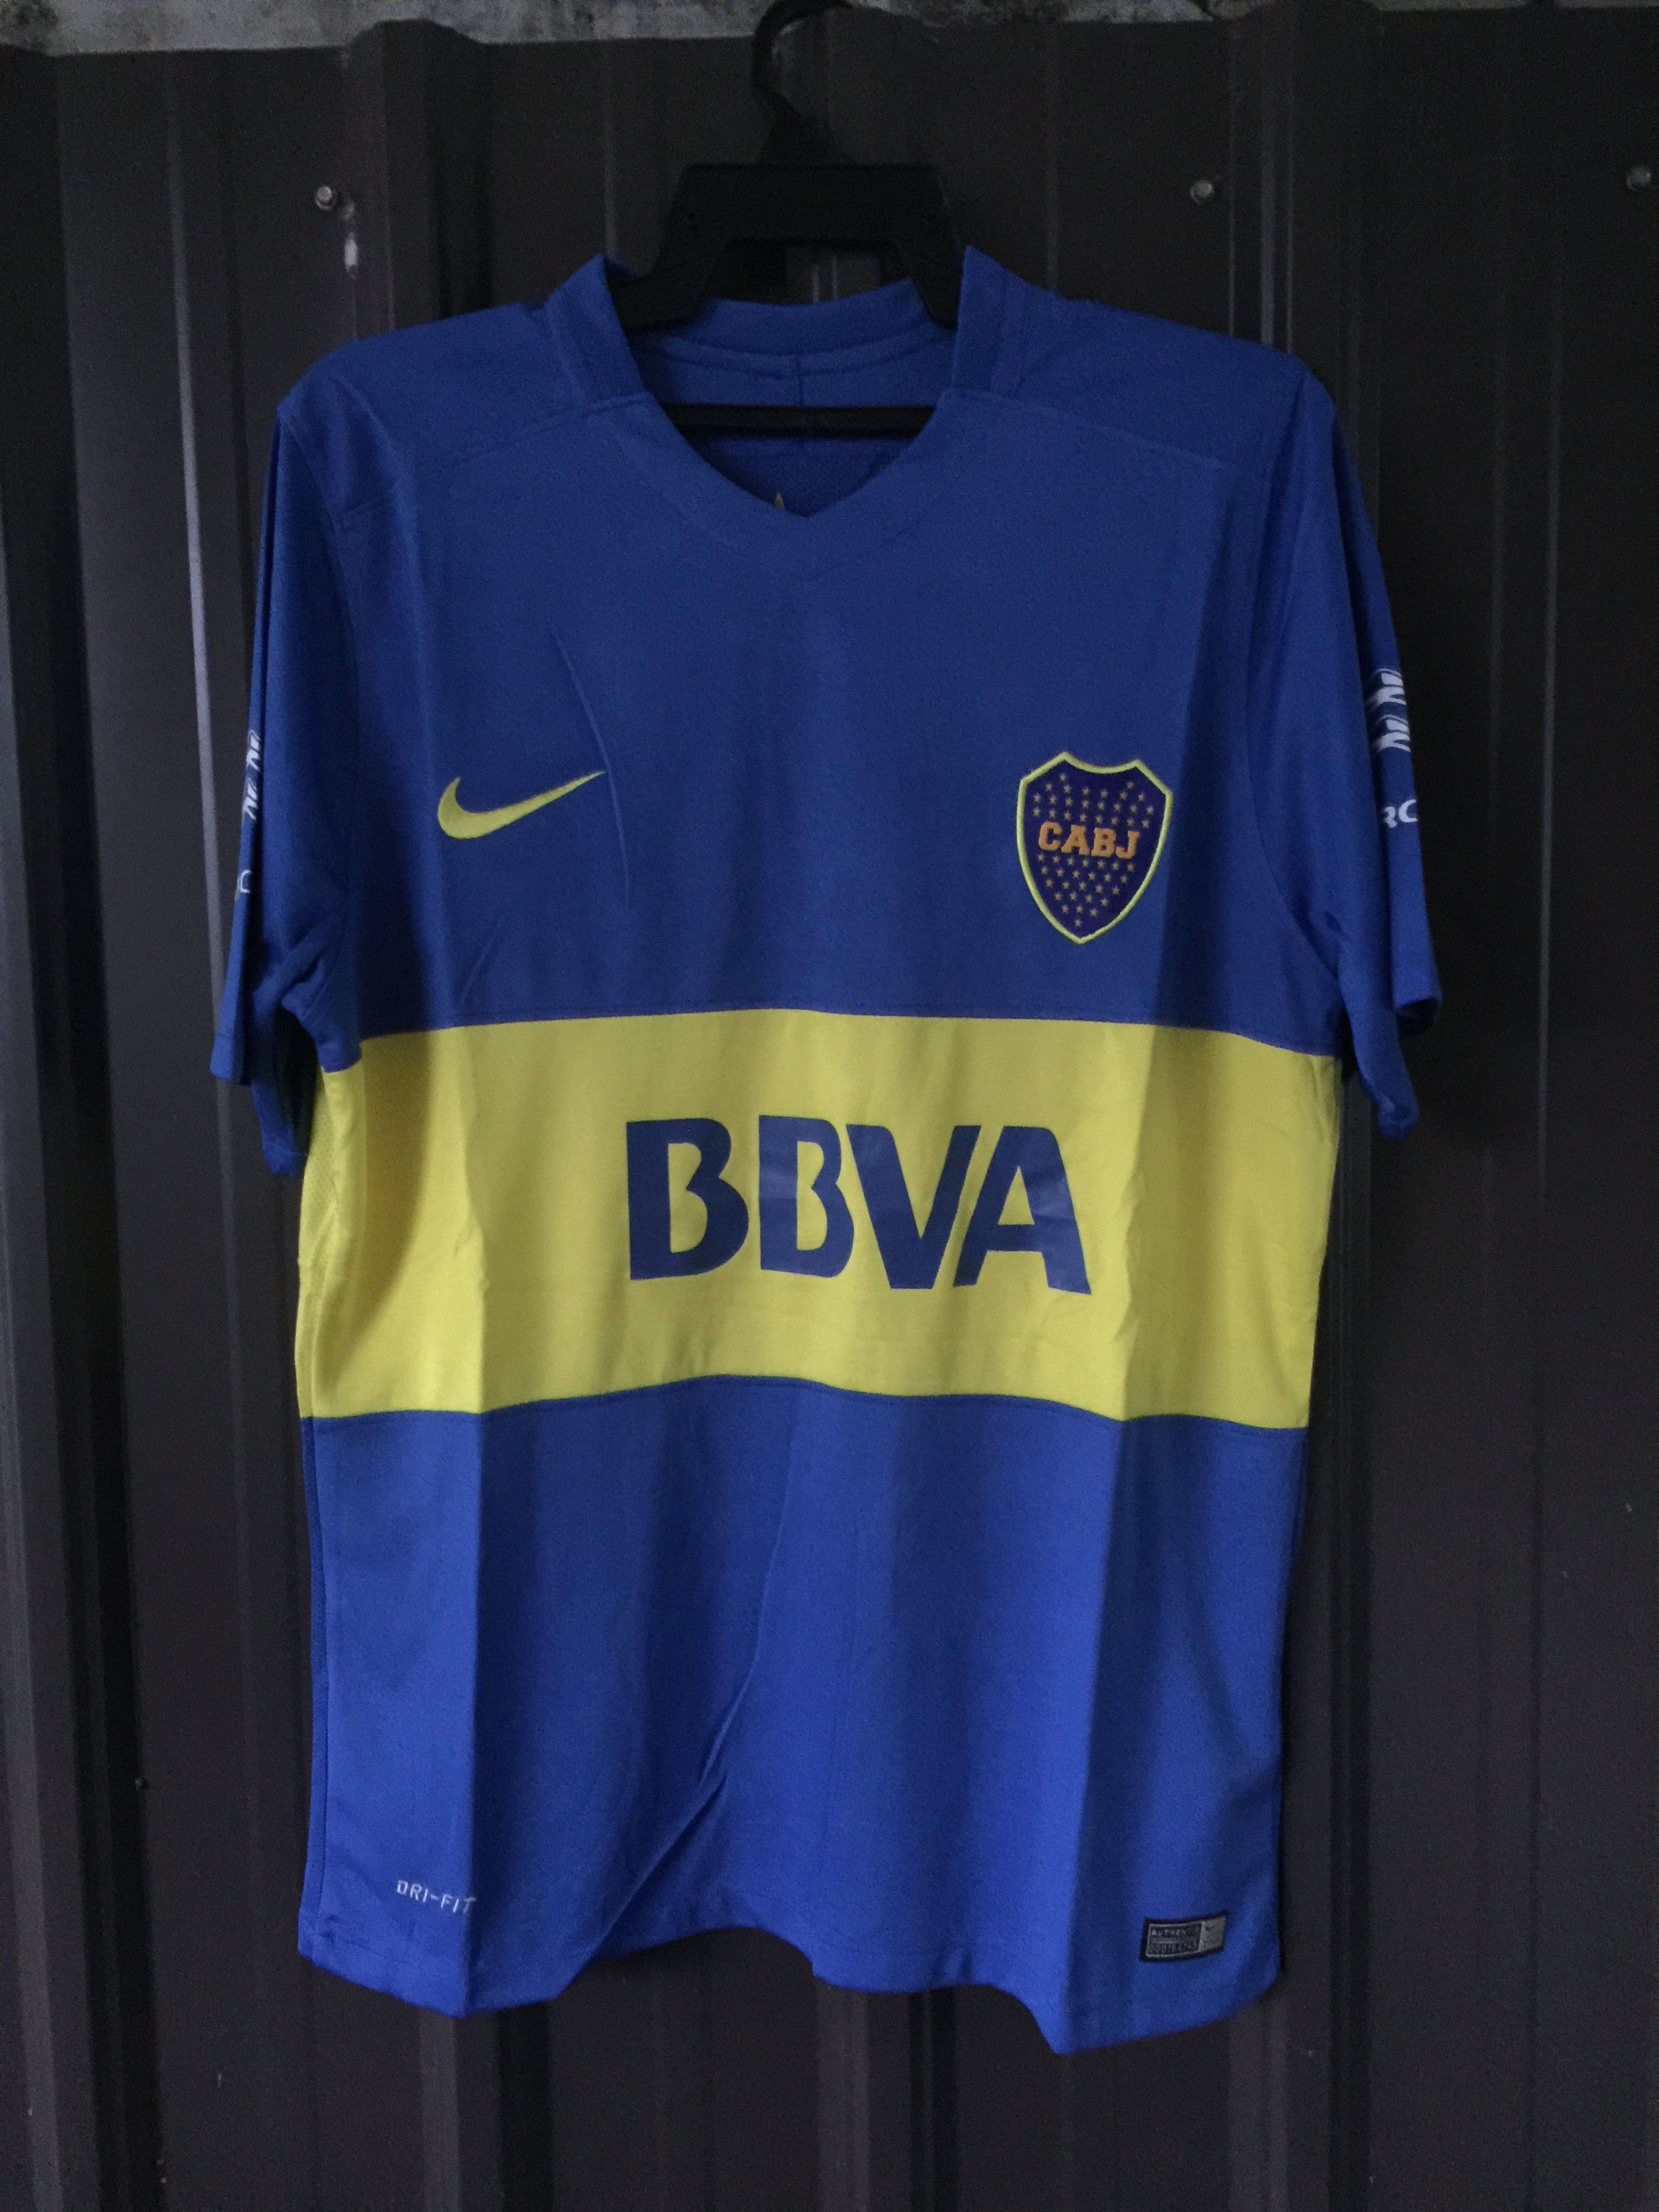 Boca Juniors 2015 Nike soccer jersey. Prepared for players #17 Meli.